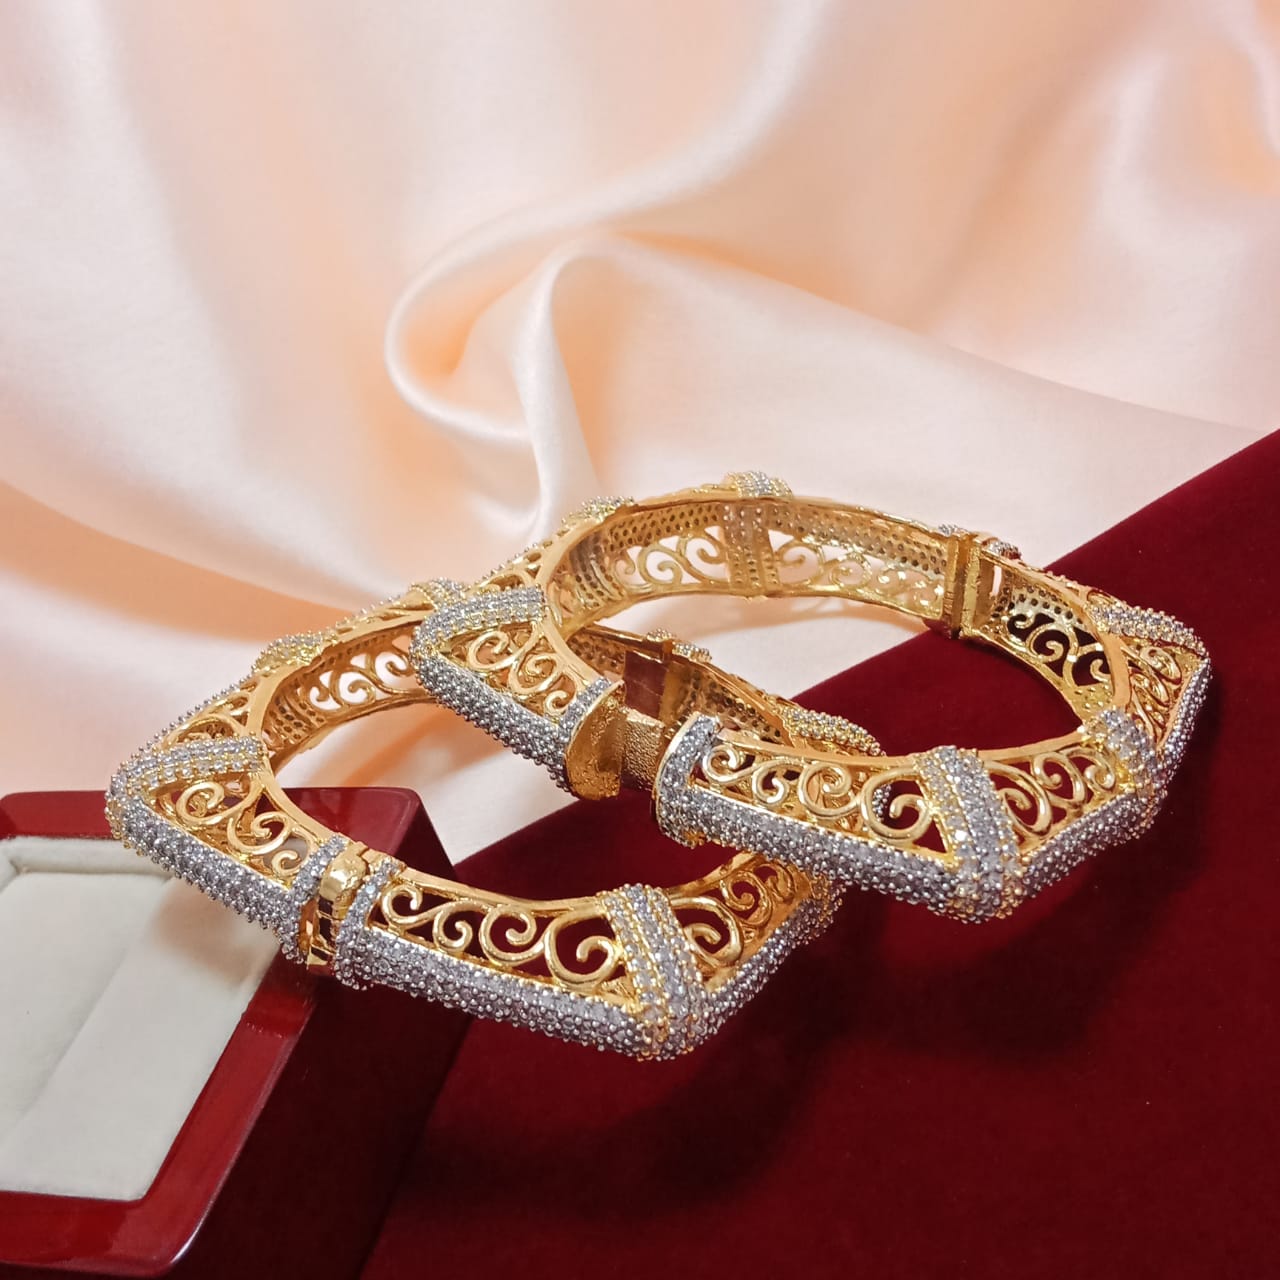 Round Diamonds & Baguettes Illusion Diamond Bracelet | Bridal Jewelry –  YESSAYAN.com